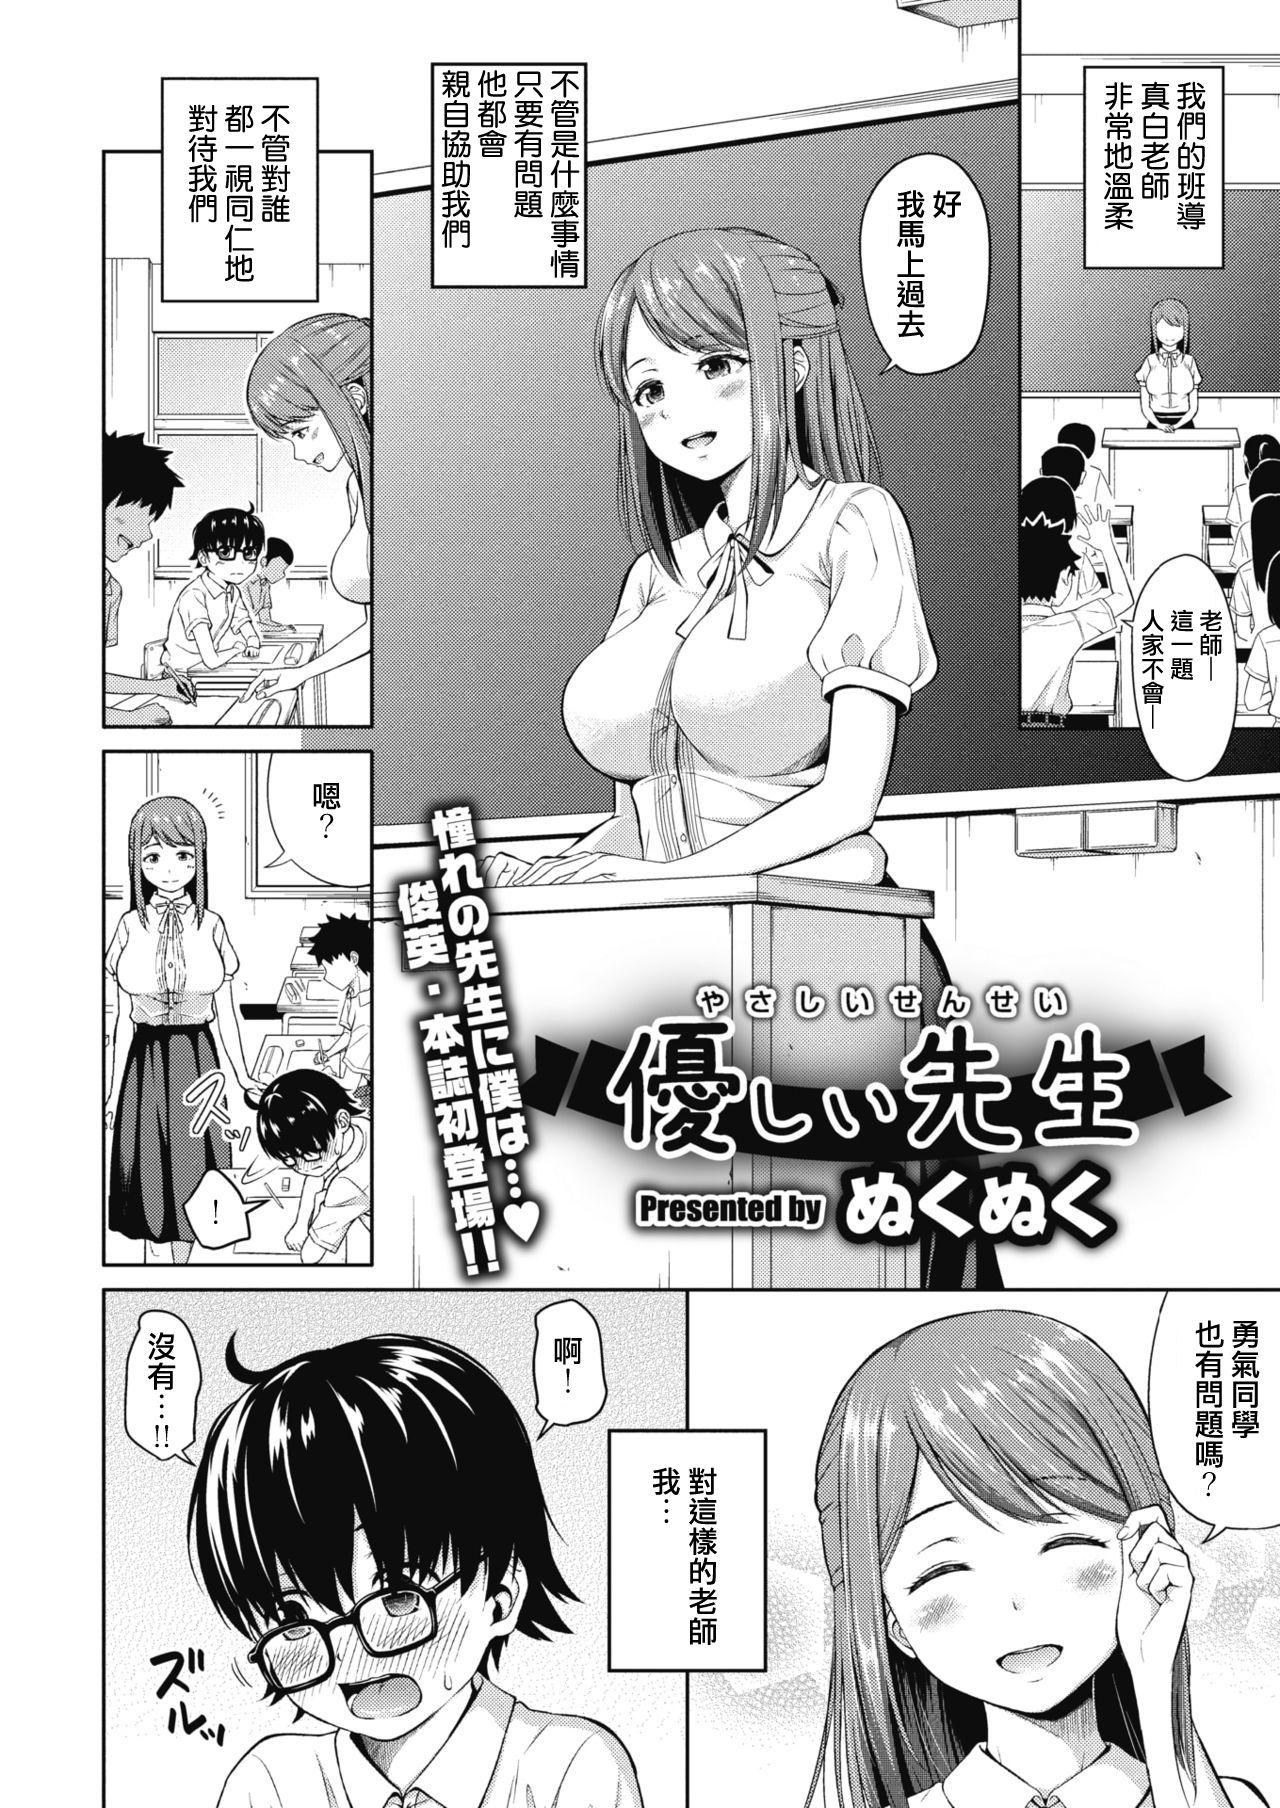 Best Yasashii Sensei Bathroom - Page 1